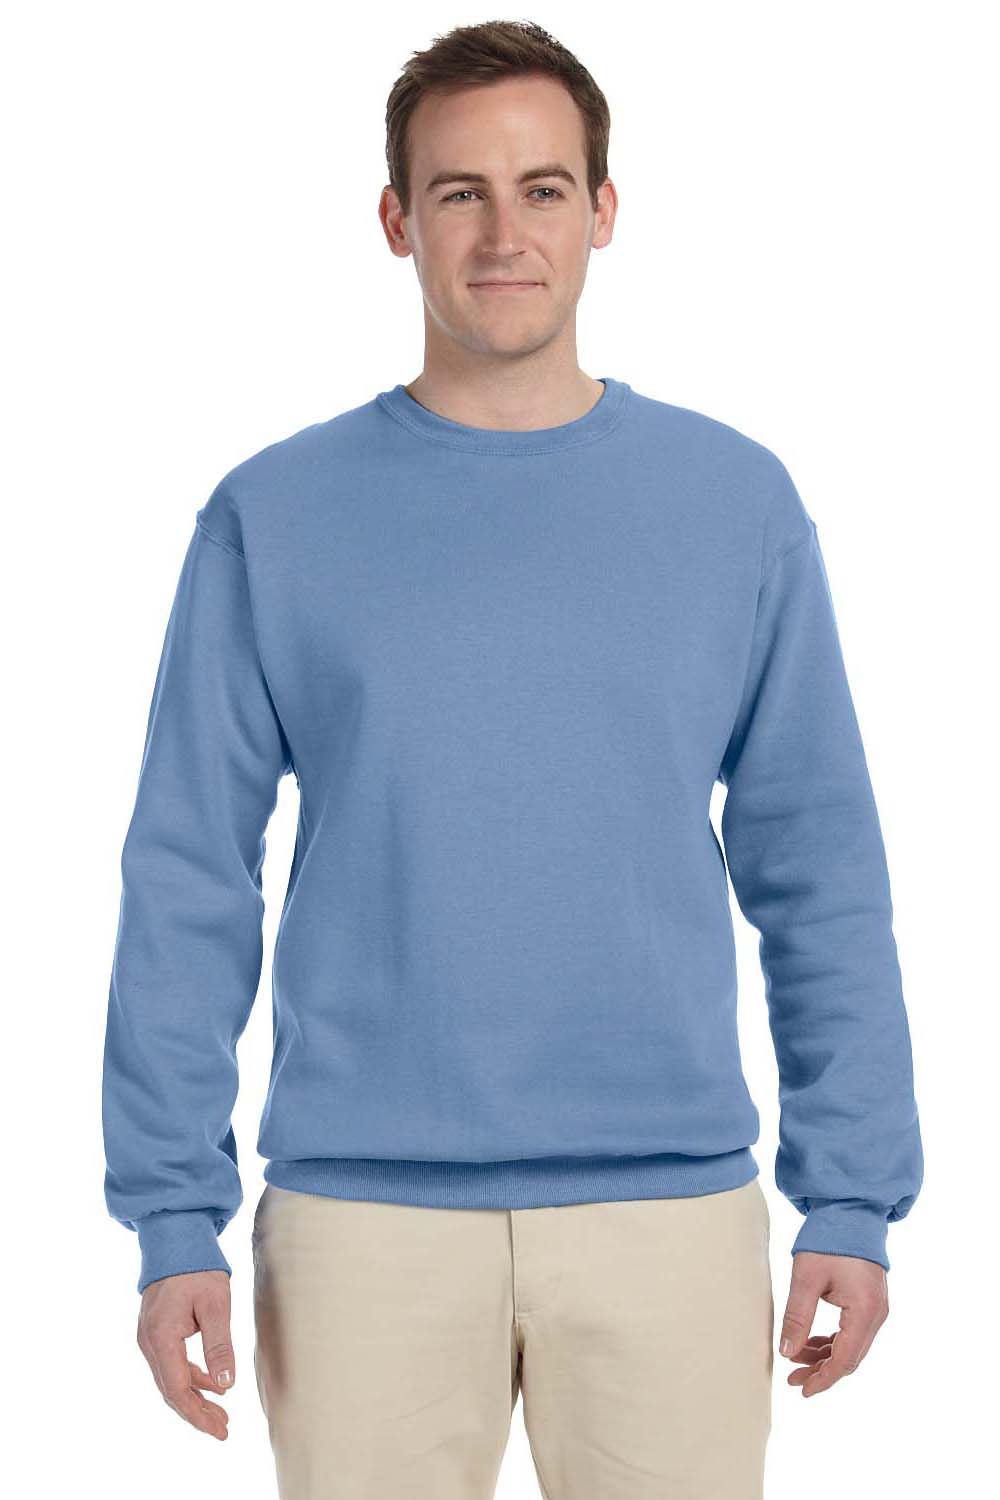 Jerzees 562 Mens NuBlend Fleece Crewneck Sweatshirt Light Blue Front